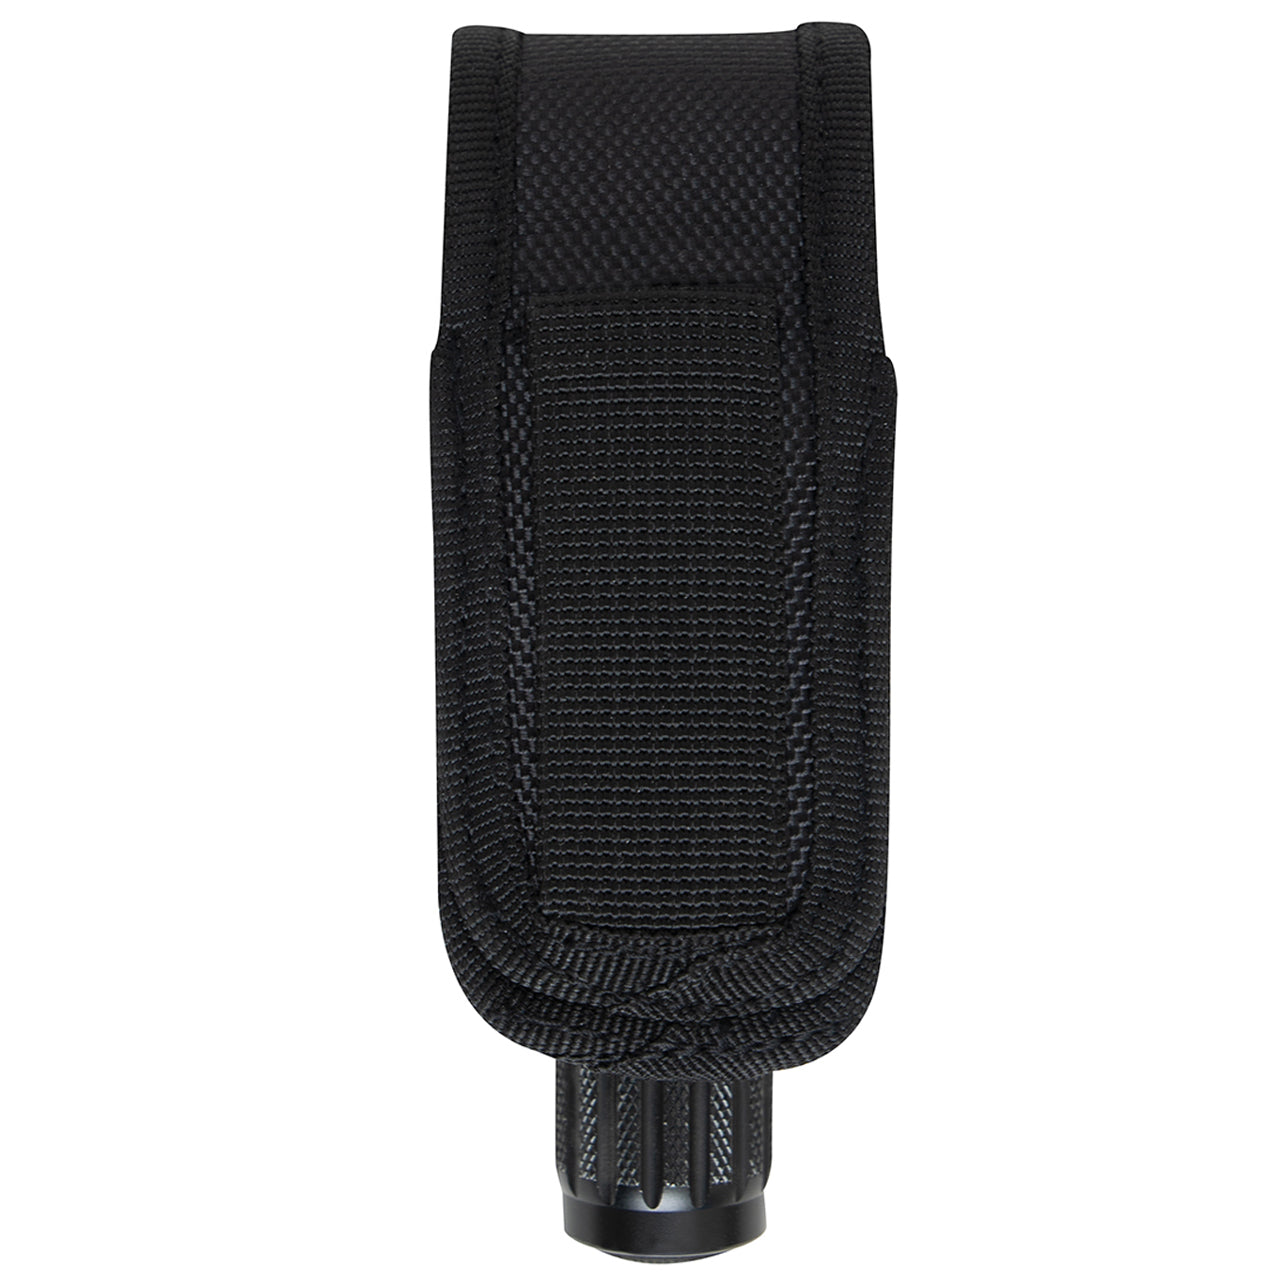 Easily add a flashlight onto your duty belt with our Enhanced Universal Flashlight Holder. www.defenceqstore.com.au